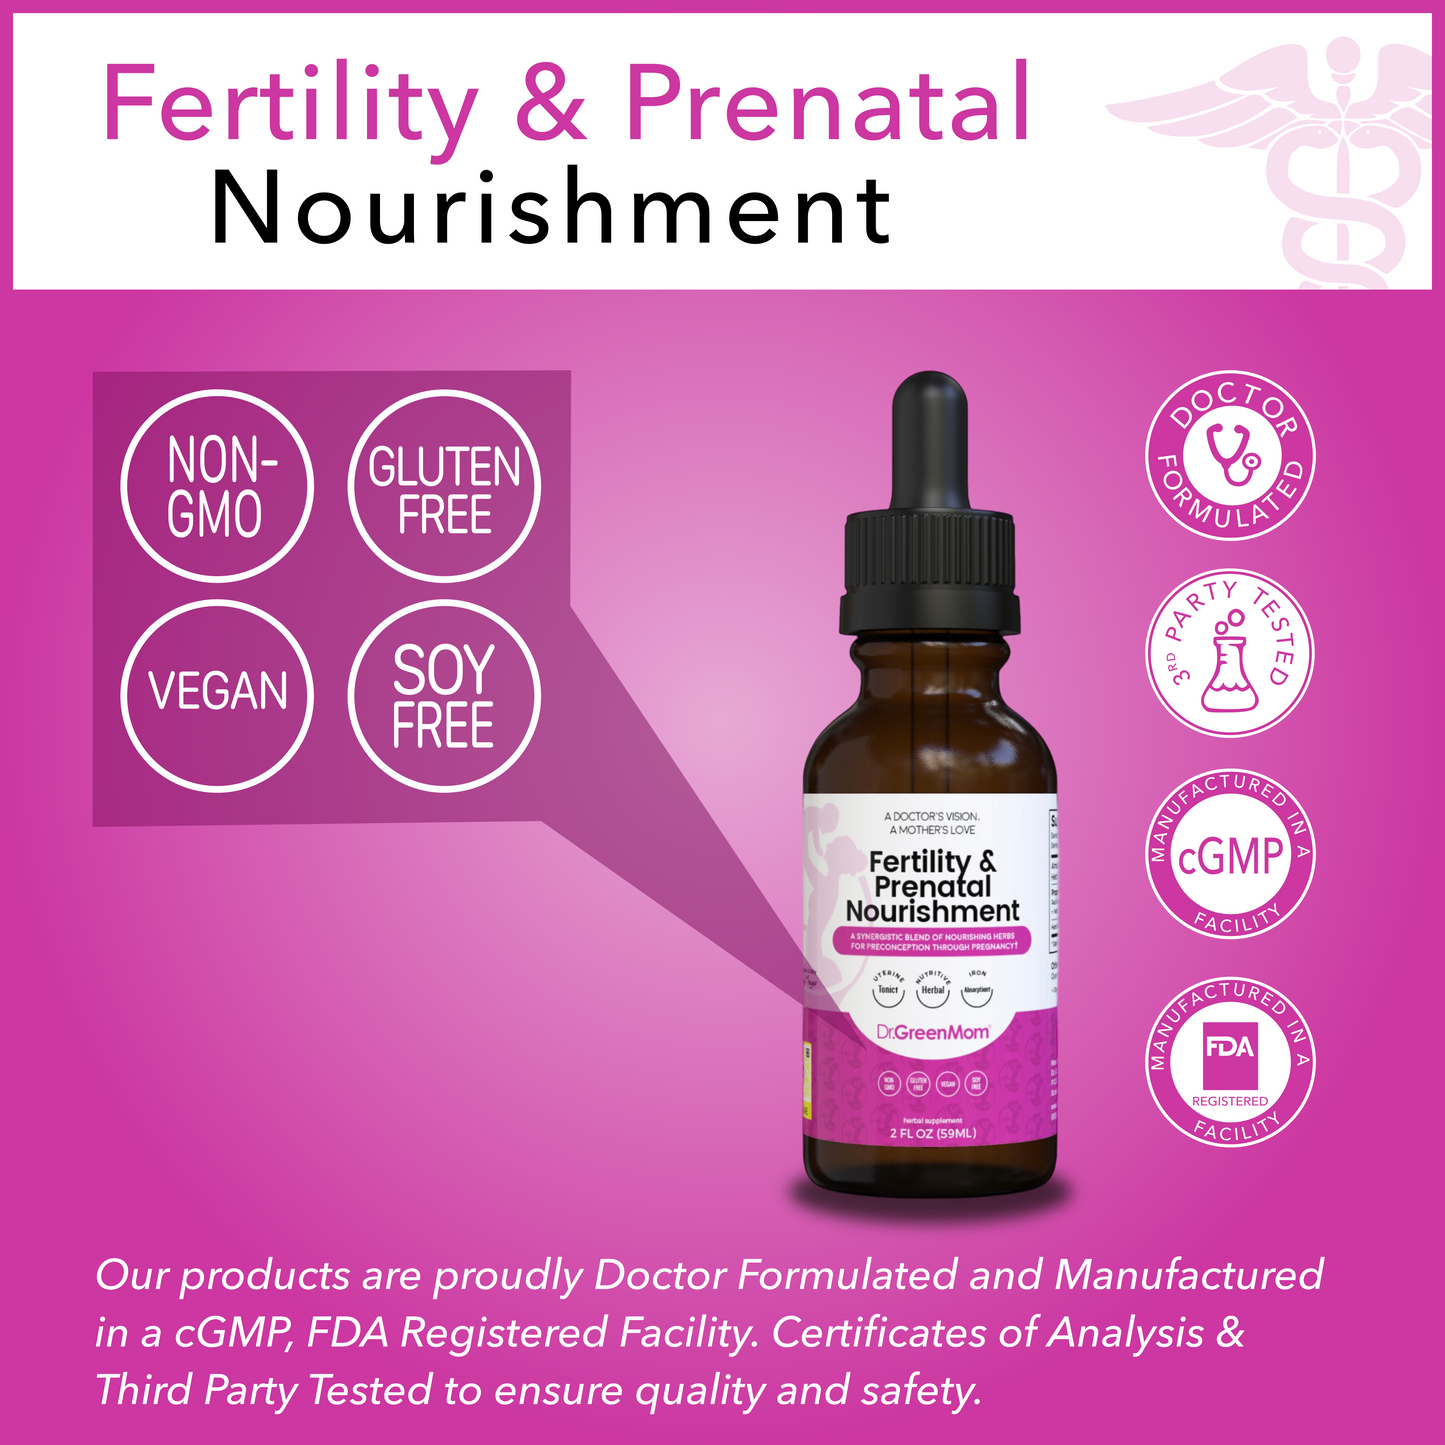 Fertility & Prenatal Nourishment